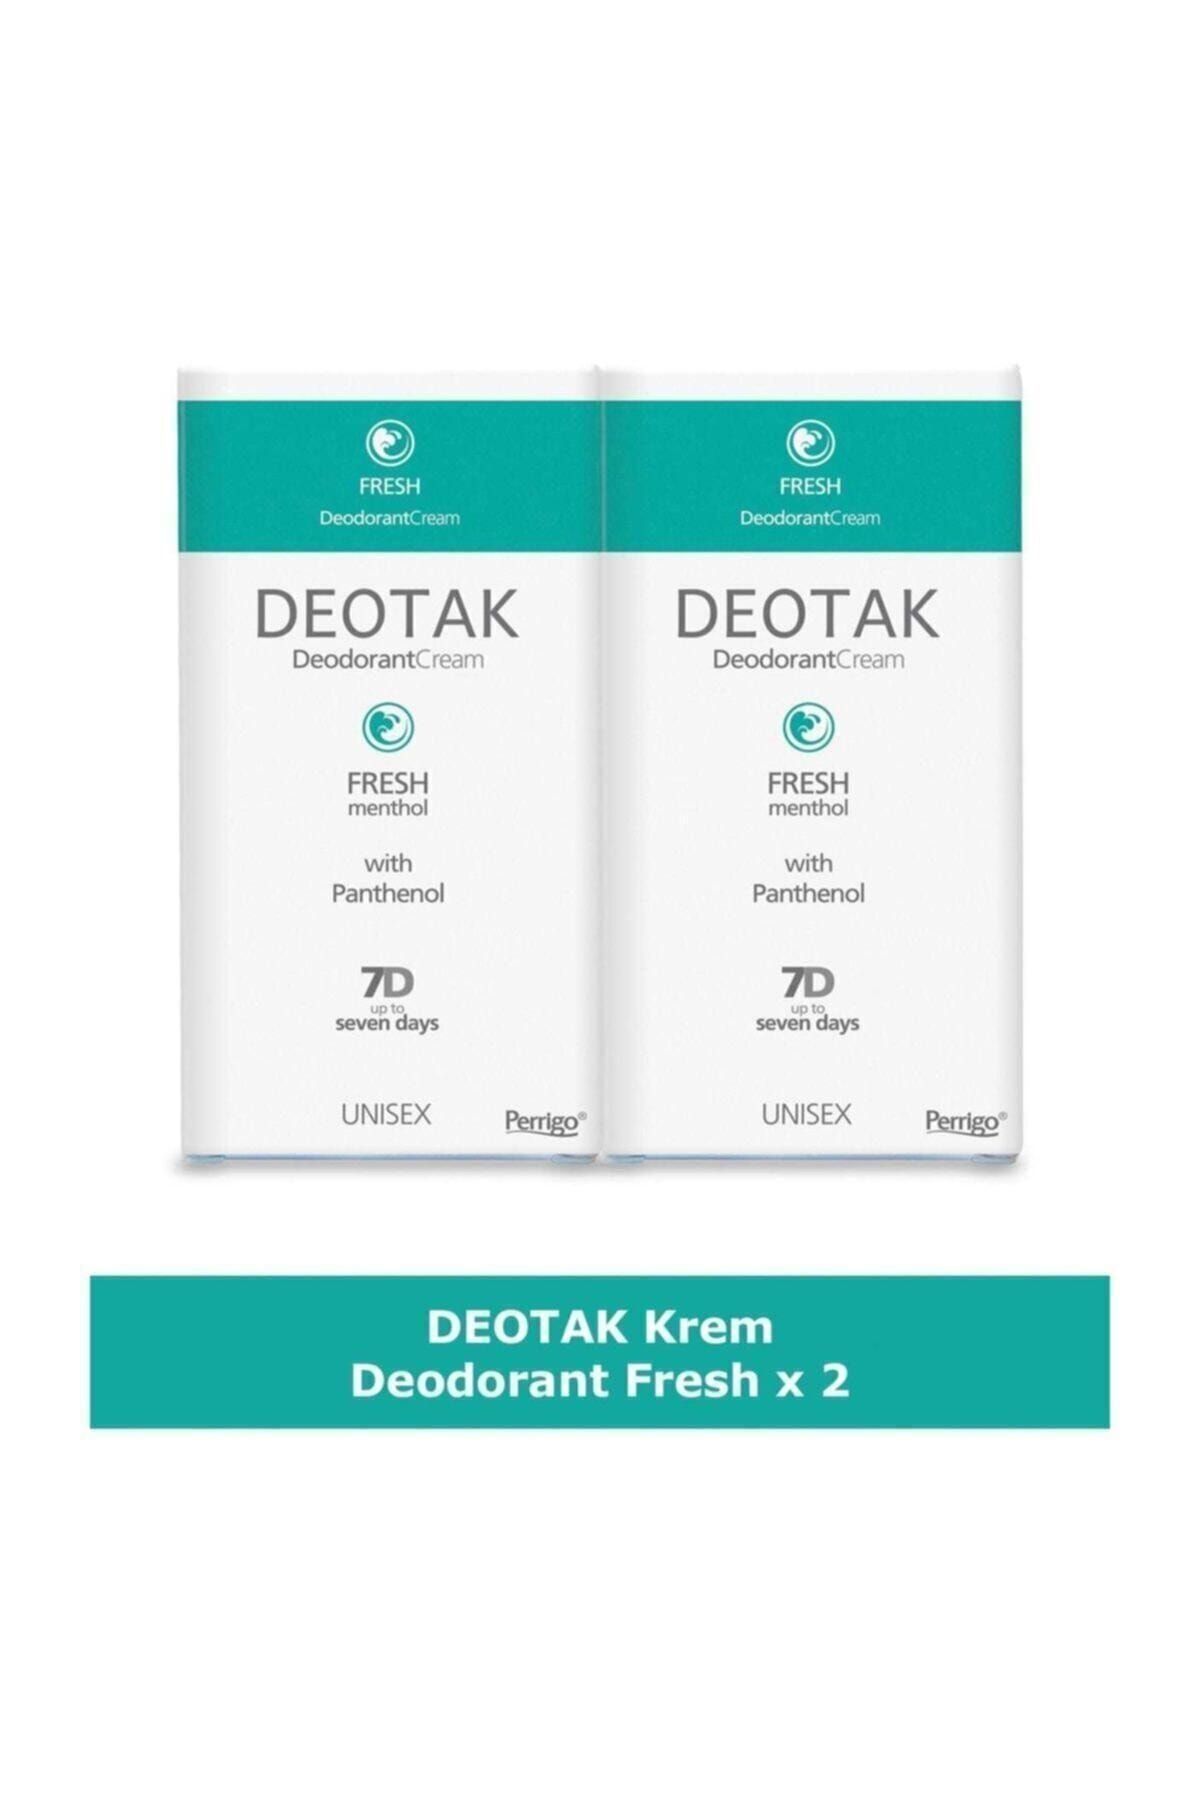 Deotak Krem Deodorant Fresh X 2 Pkt